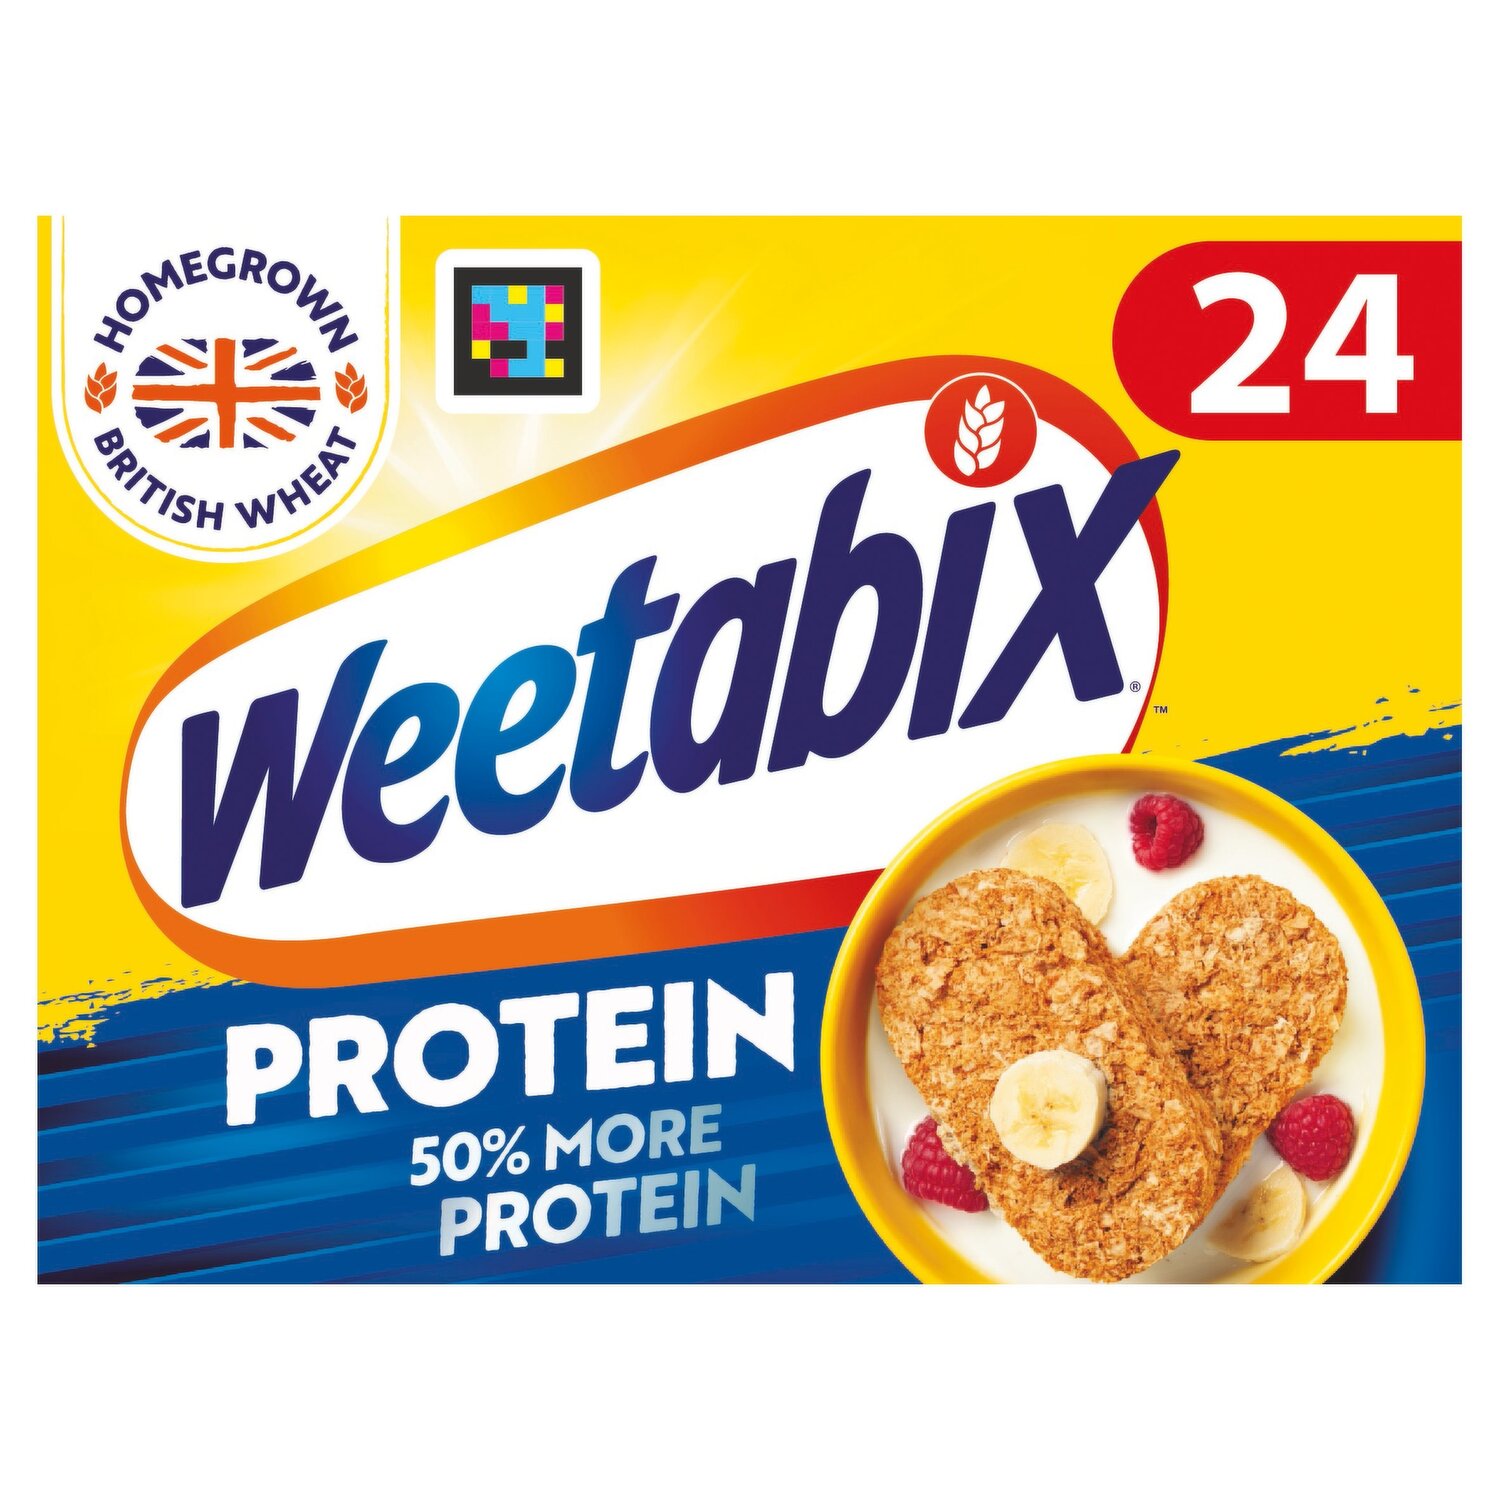 Weetabix Protein - Weetabix Cereals